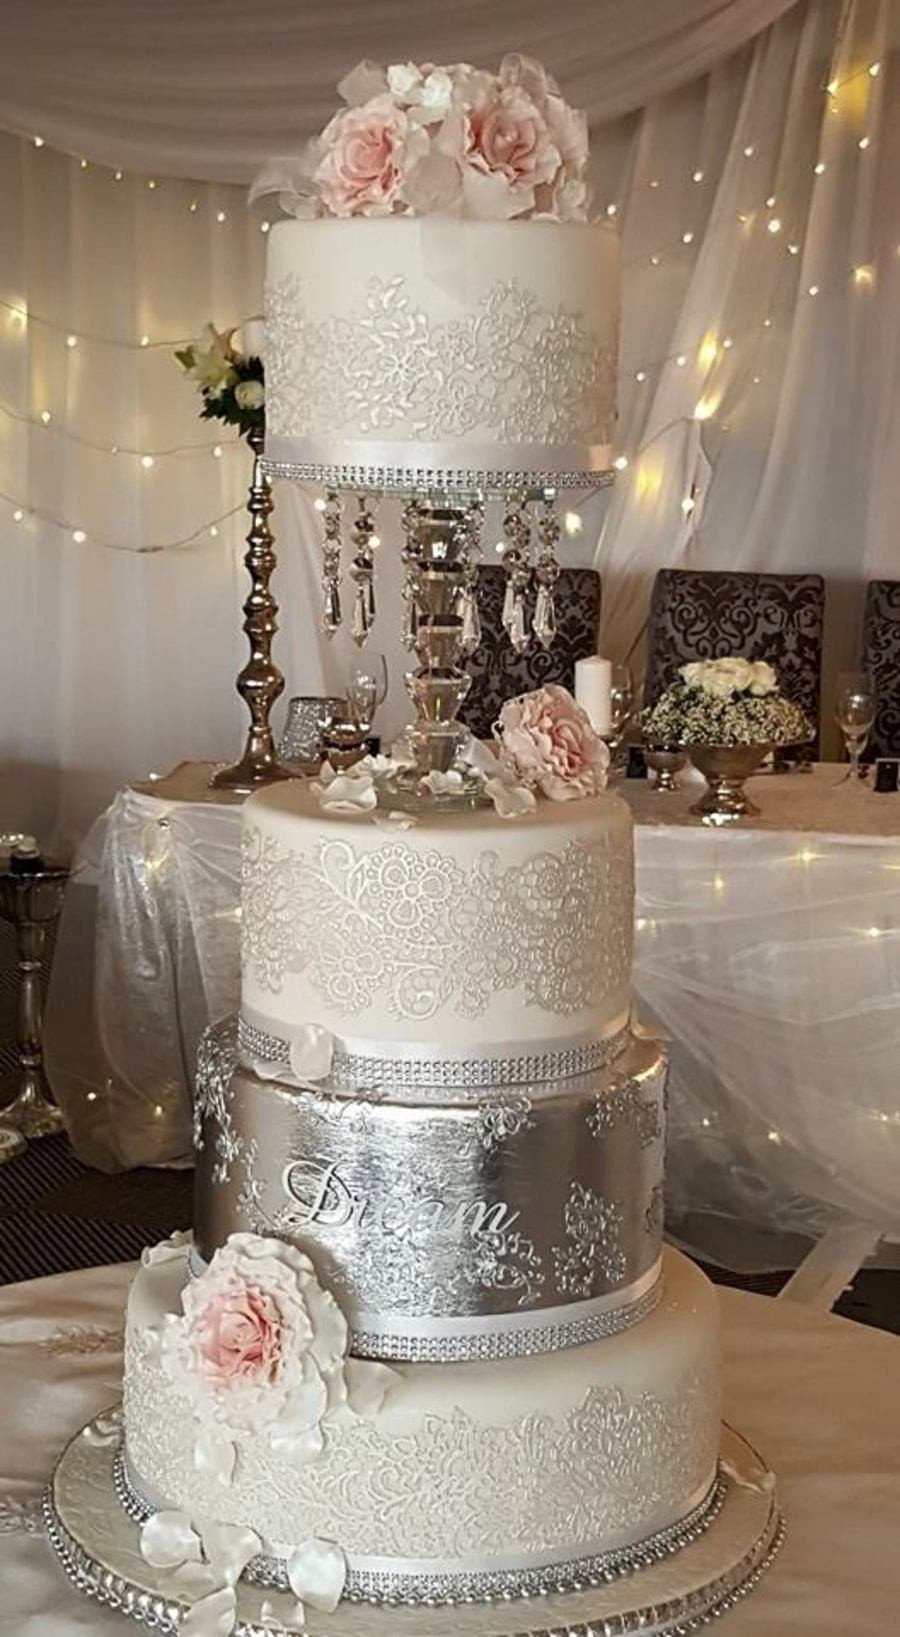 Creative Wedding Cakes
 Wedding Cake Silver Dreams 2015 Cornelia Marreiros